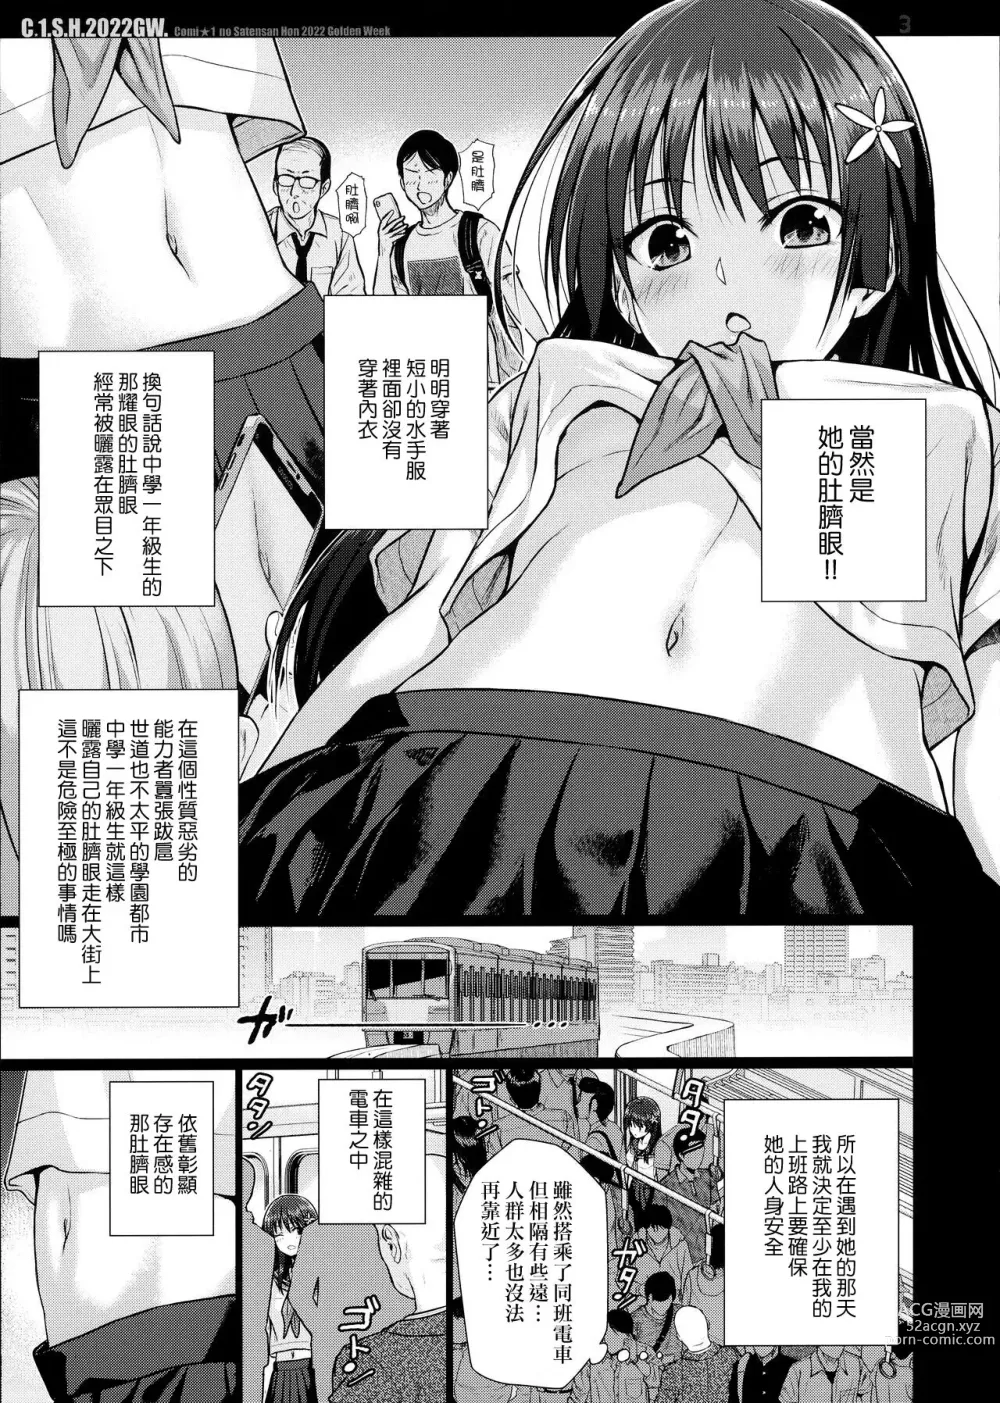 Page 3 of doujinshi C☆1.S.H.2022GW.